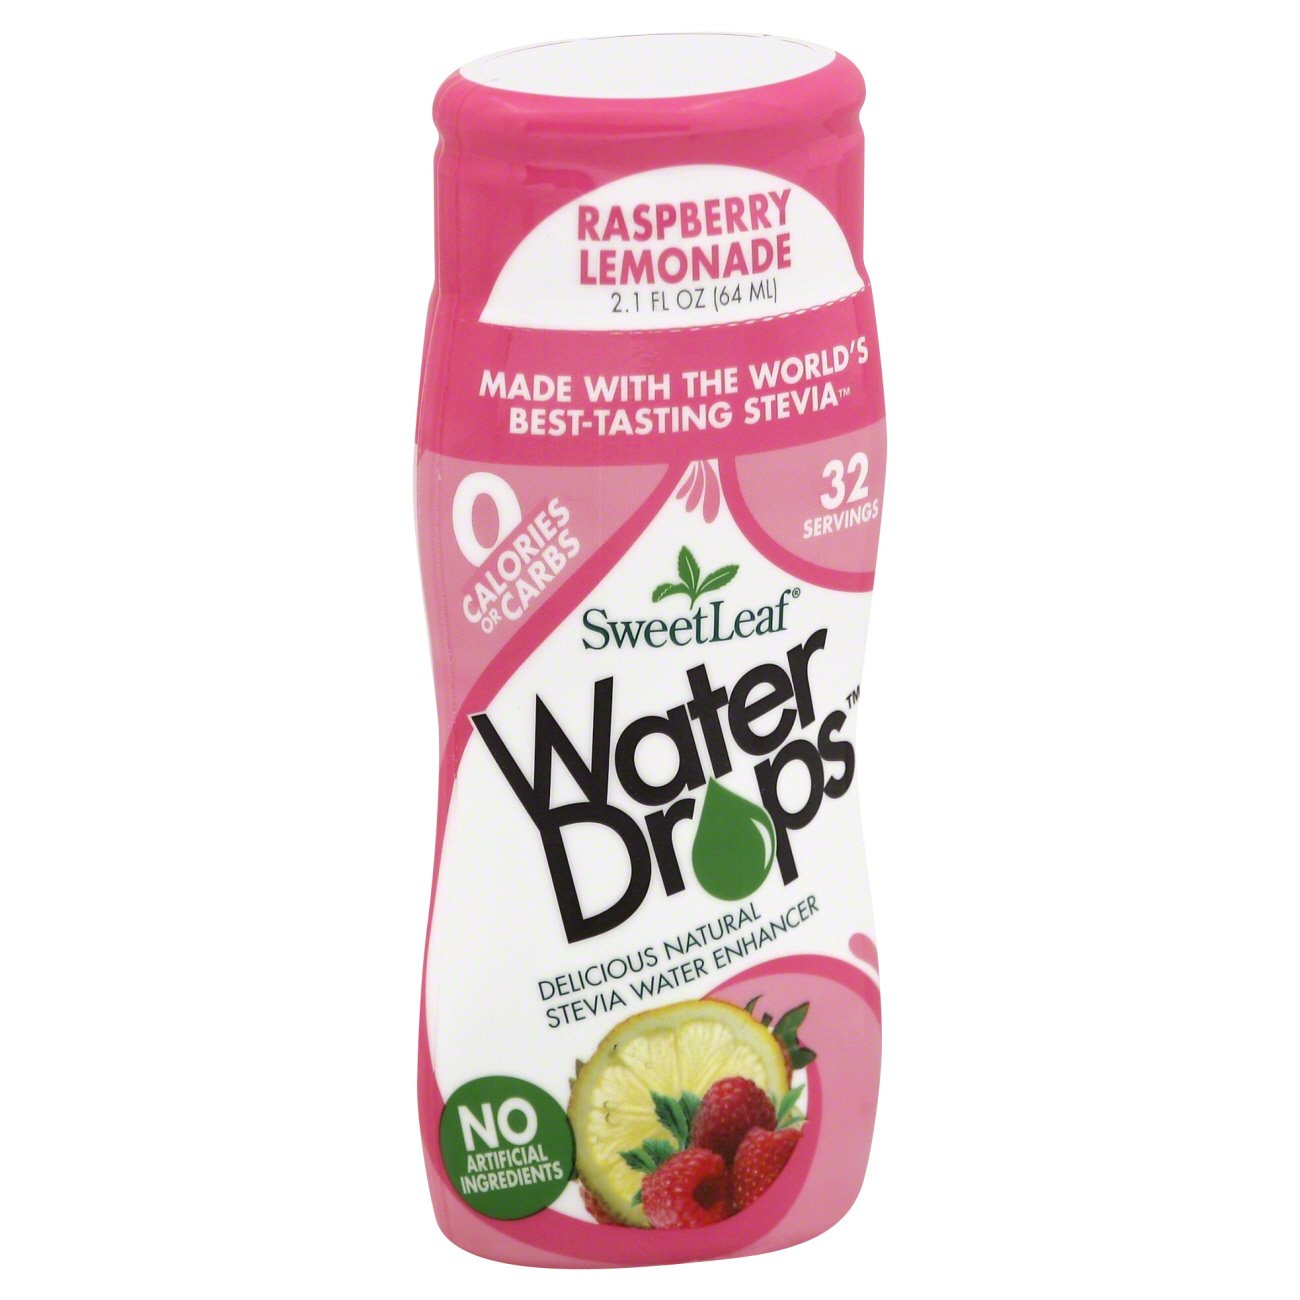 Sweetleaf Water Drops Raspberry Lemonade Shop Mixes And Flavor Enhancers At H E B 5474